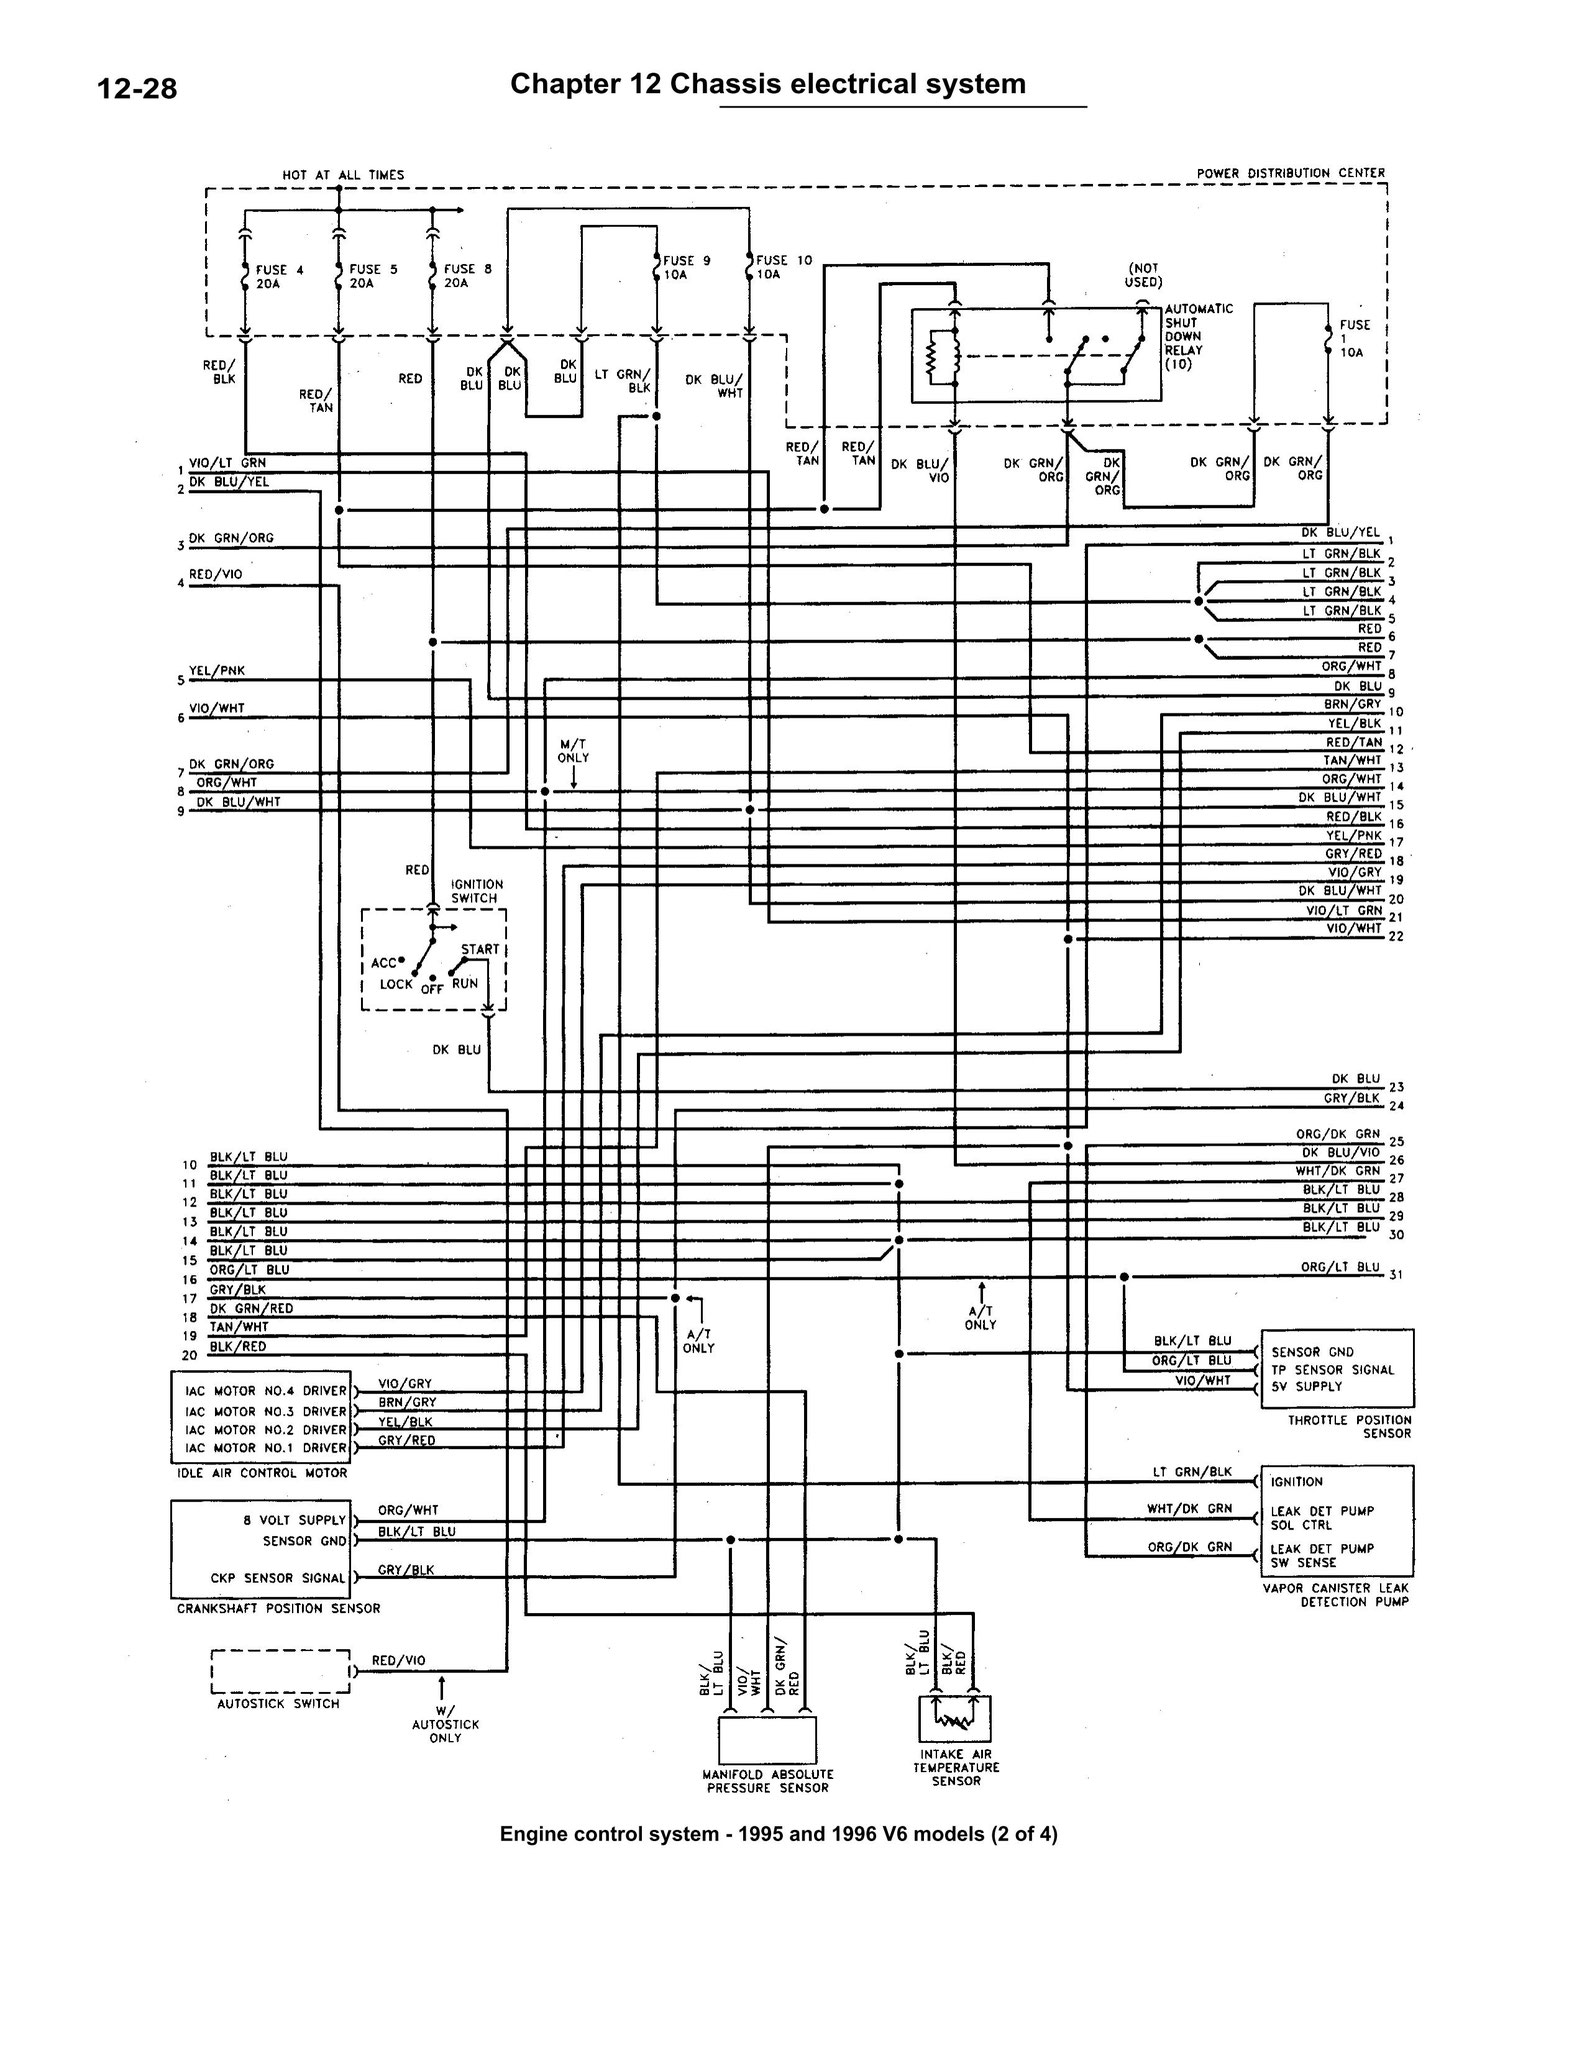 1999 Plymouth Grand Voyager Wiring Diagram - Wiring Diagram